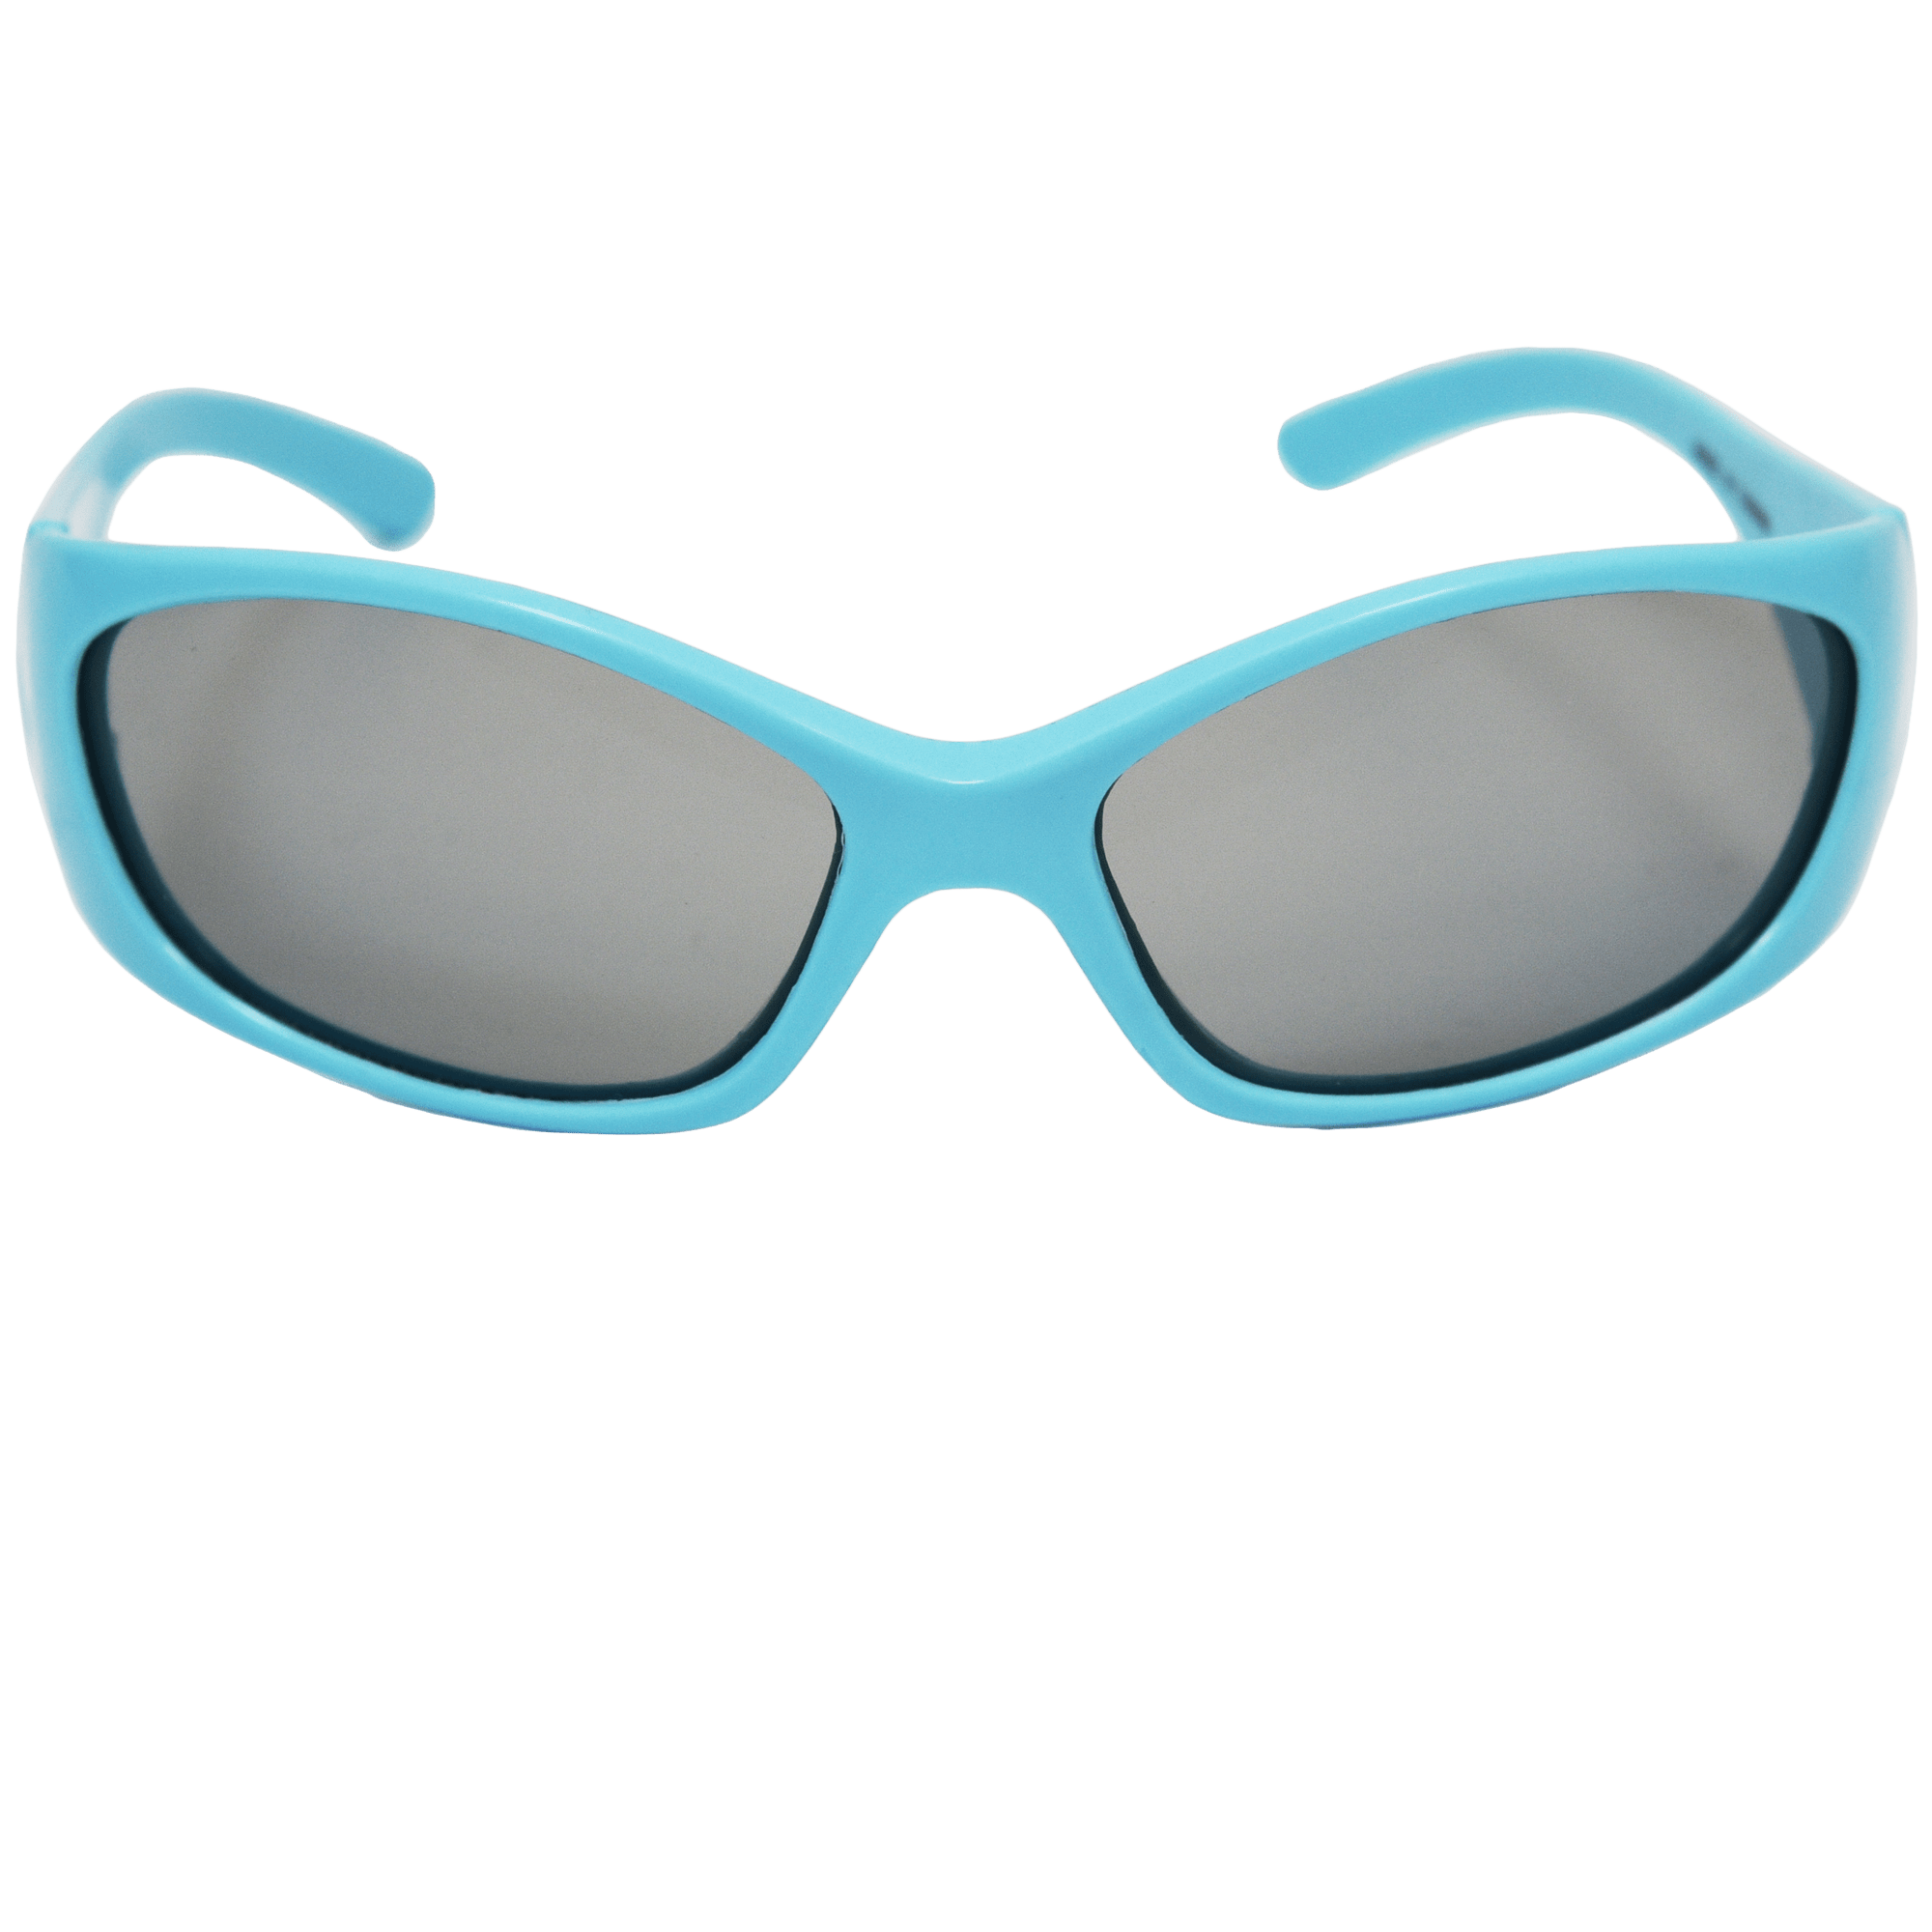 Good-Lite Intermediate Stereoacuity Glasses